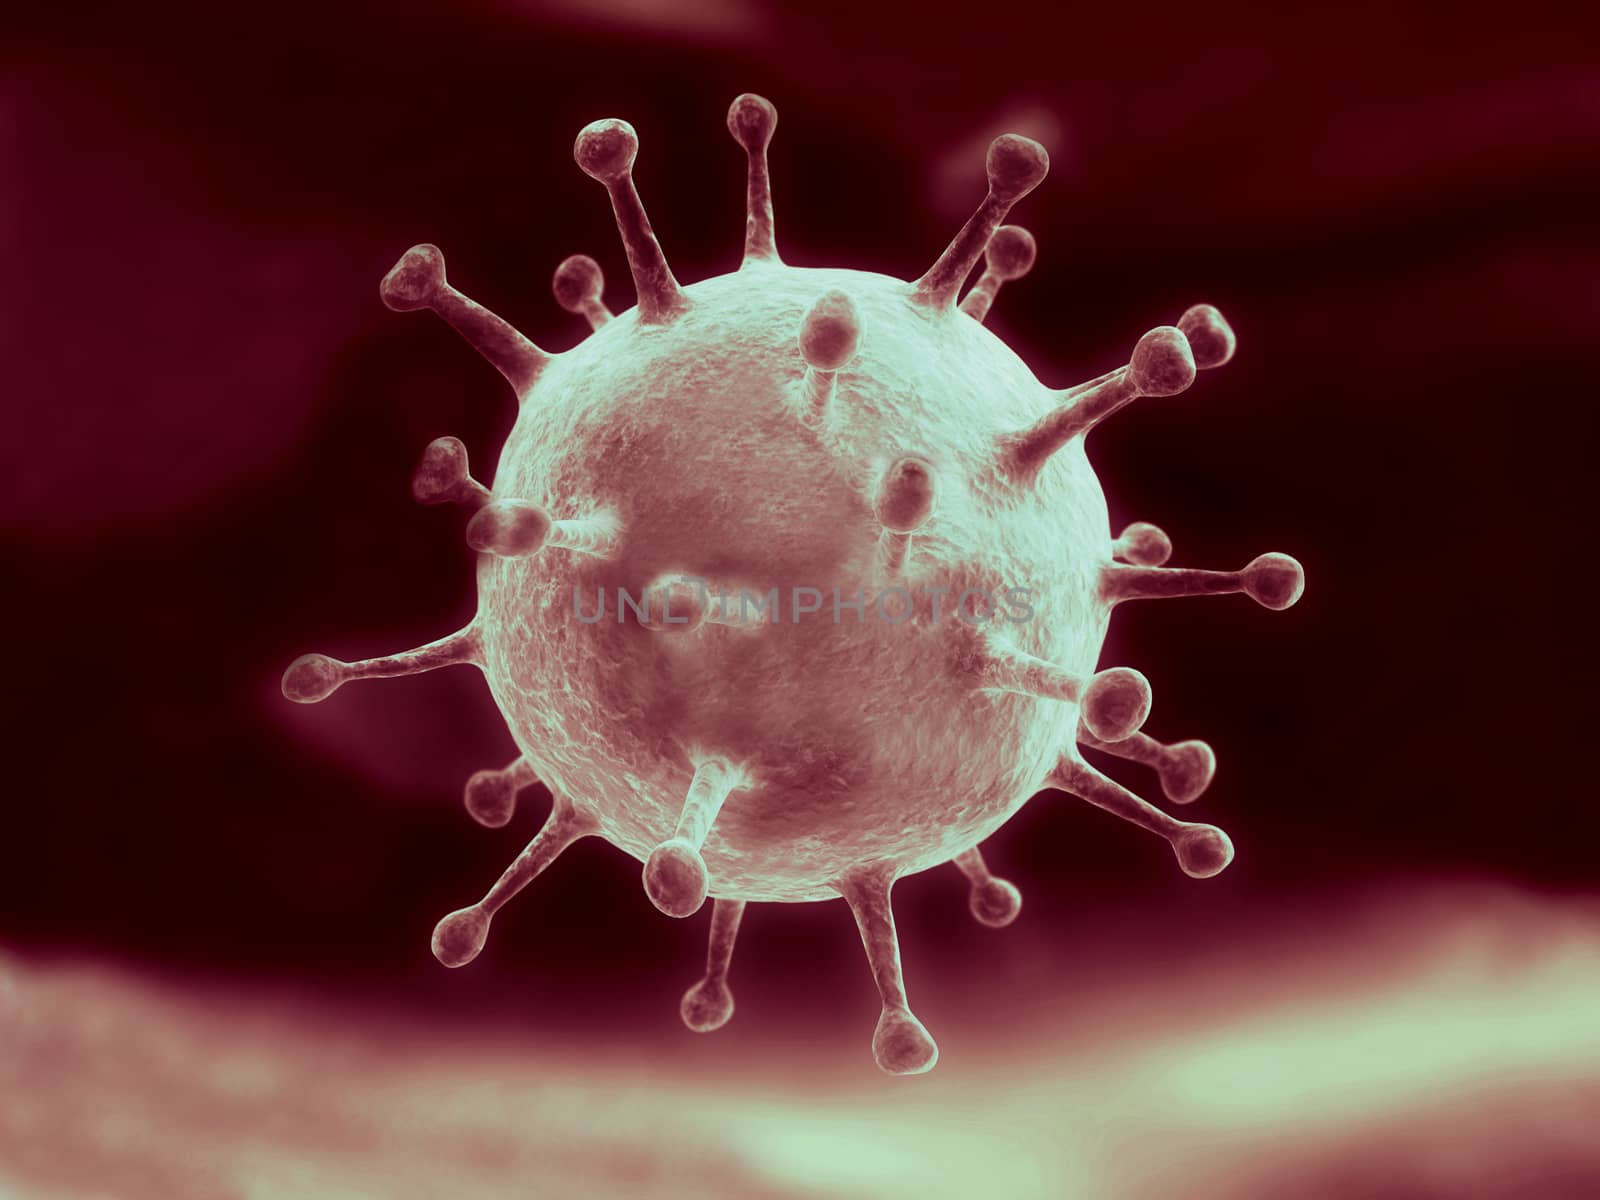 A new flu virus under a microscope close up in red